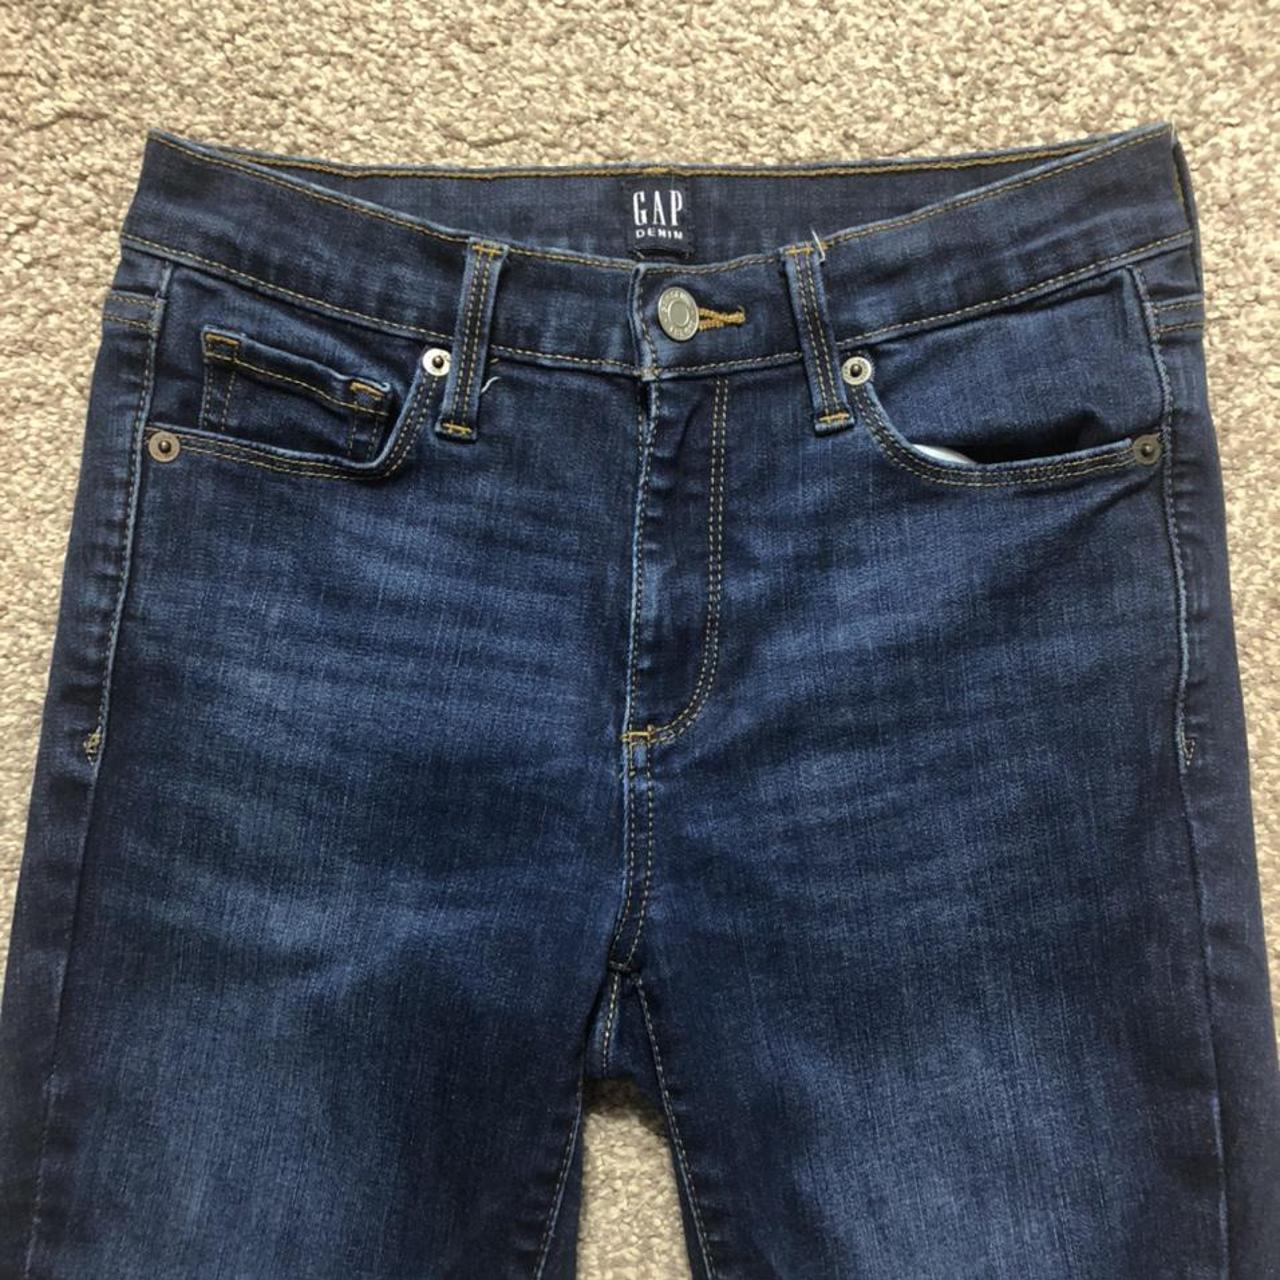 Product Image 4 - Women’s GAP denim jeans 
True